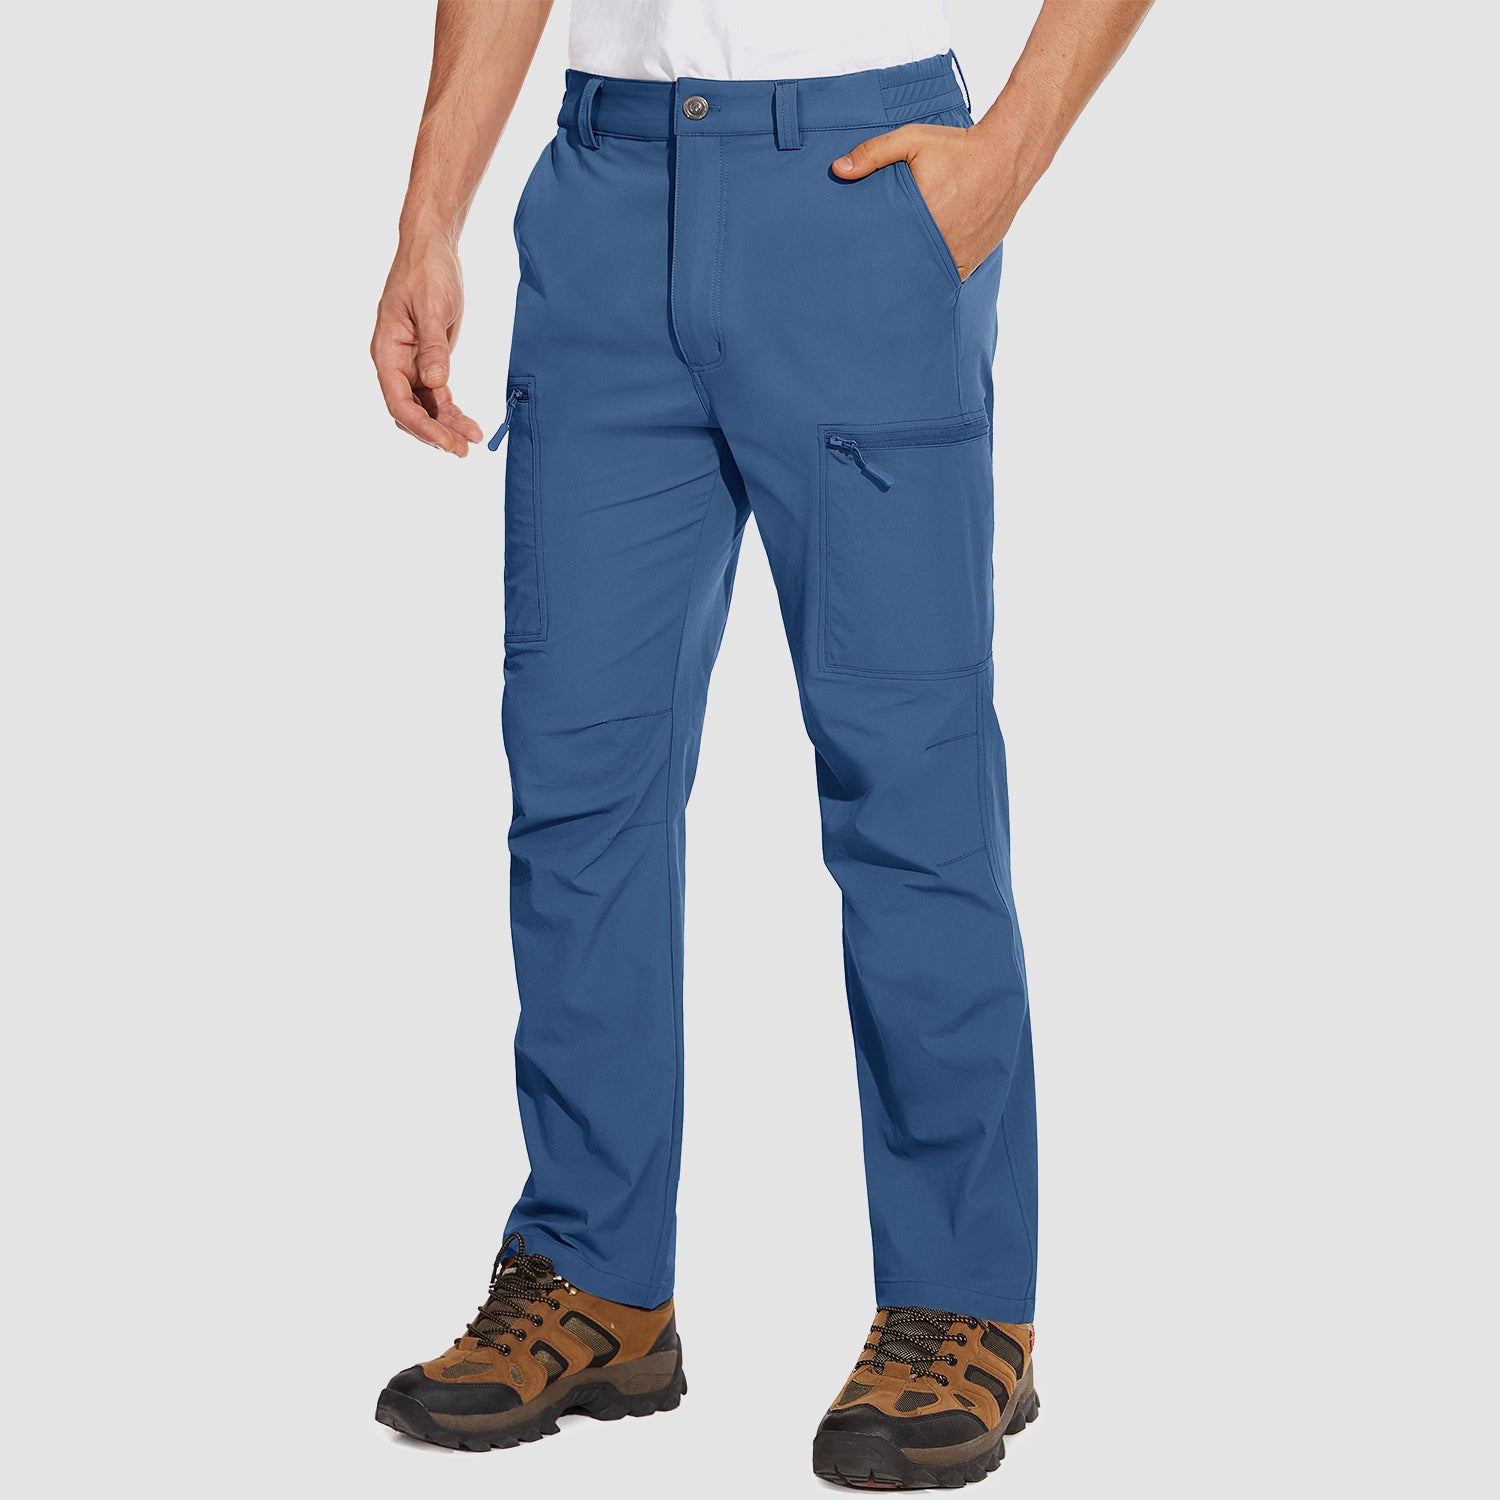 Cargo Pants Men,Casual Cargo Trousers Work Wear Combat Safety Cargo 6 Pocket  Workout Full Pants Plus Size Khaki at Amazon Men's Clothing store